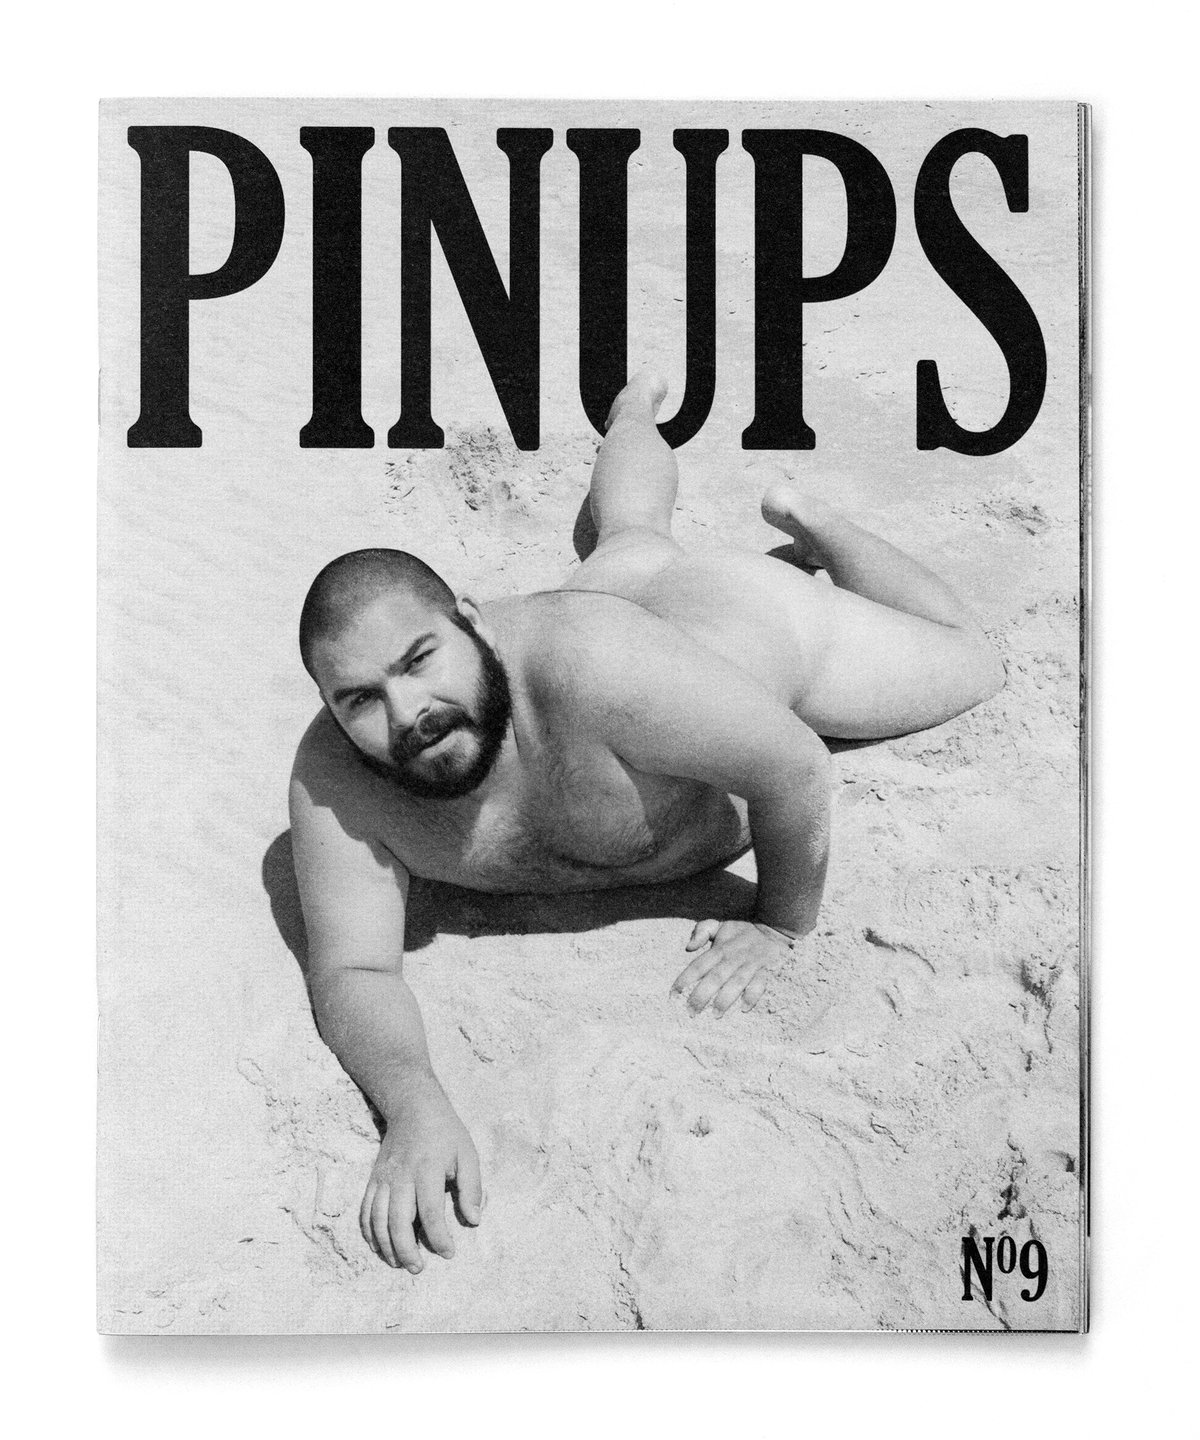 Image of Pinups Nº9